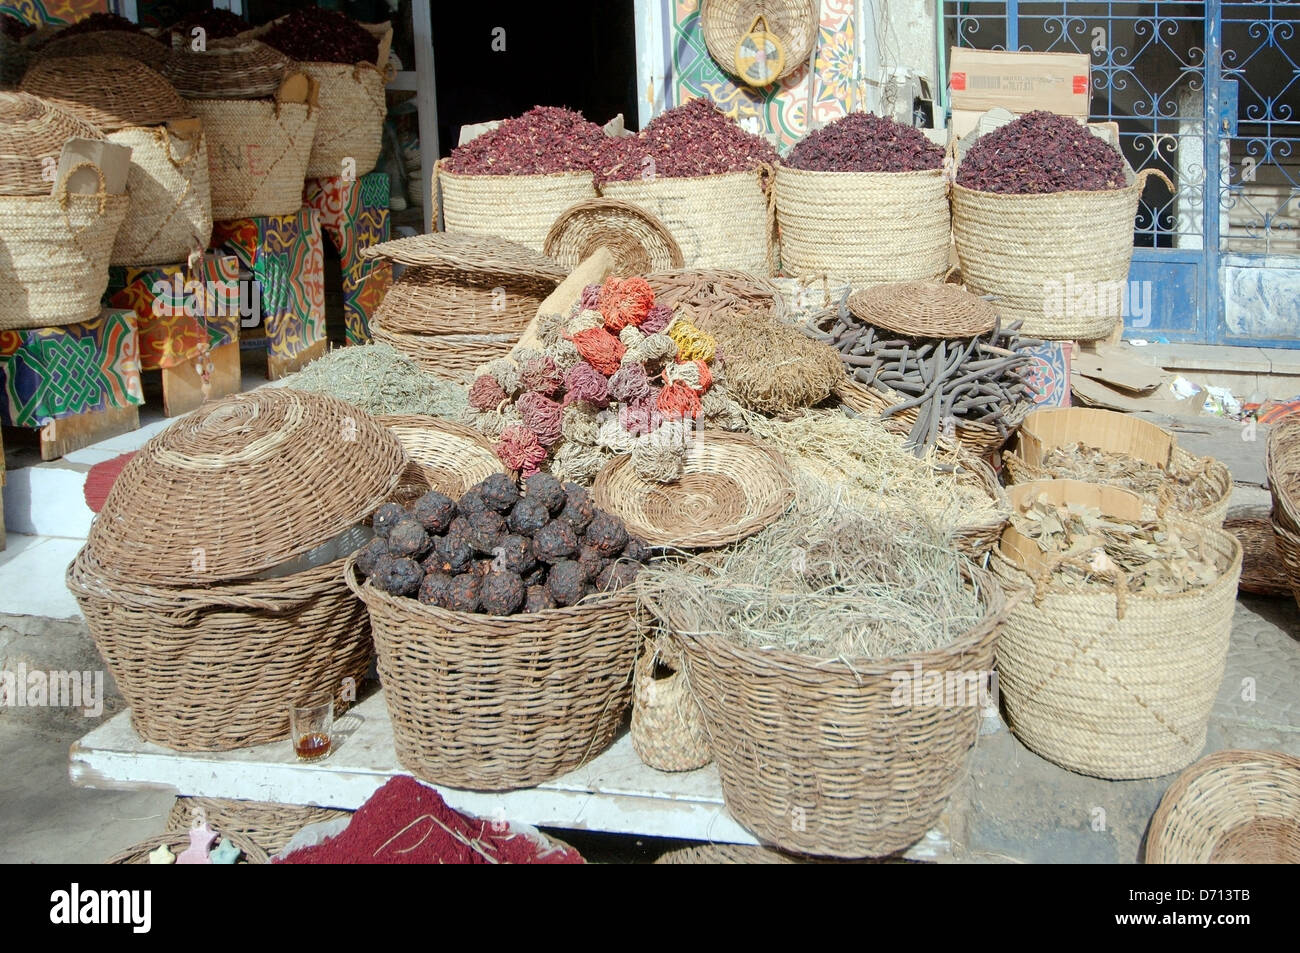 Sale of different varieties of tea, Old Market, Sharm el-Sheikh, Sinai Peninsula, Egypt  Stock Photo